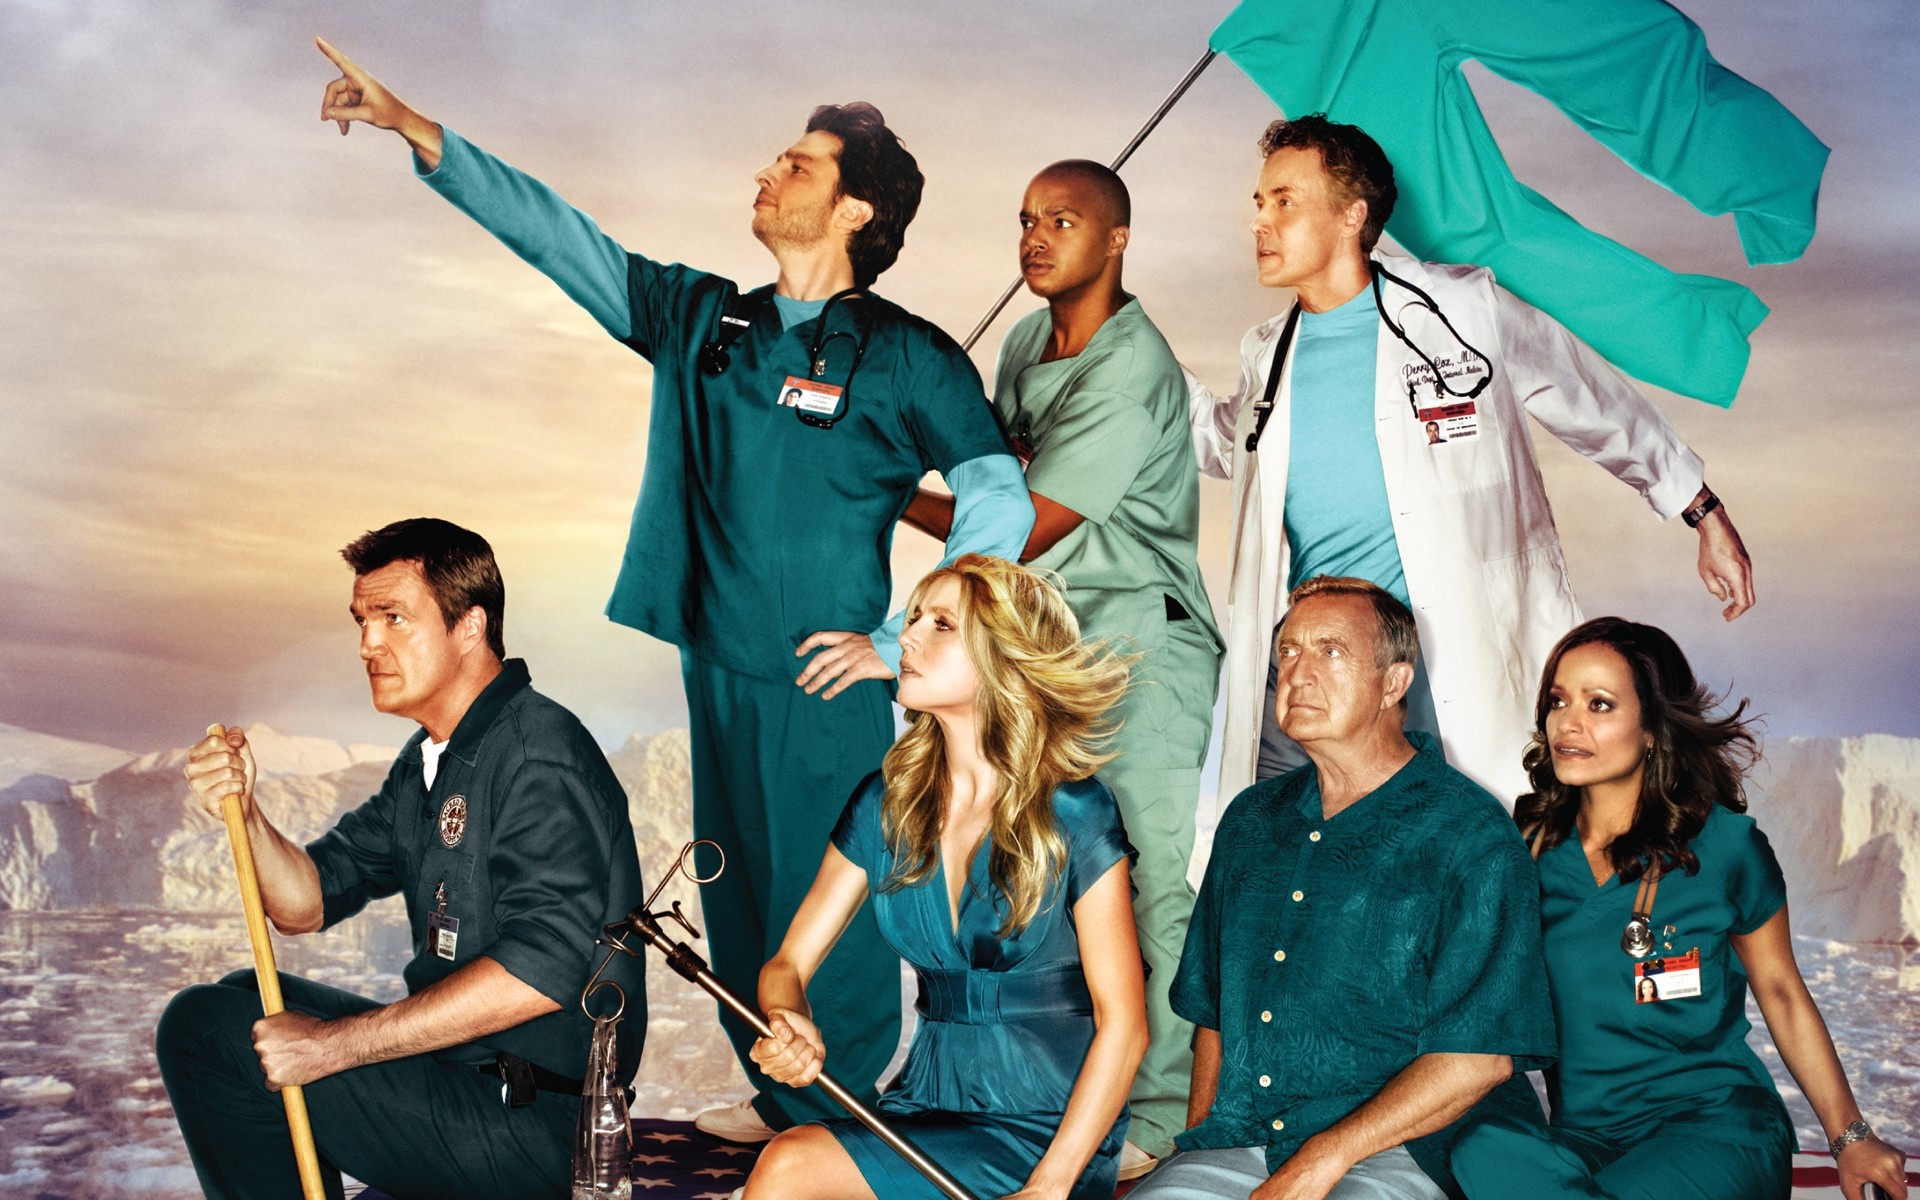 Scrubs (TV Series): Elliot Reid, Robert “Bob” Kelso, Percival “Perry” Cox, Carla Espinosa, The “Janitor”. 1920x1200 HD Wallpaper.